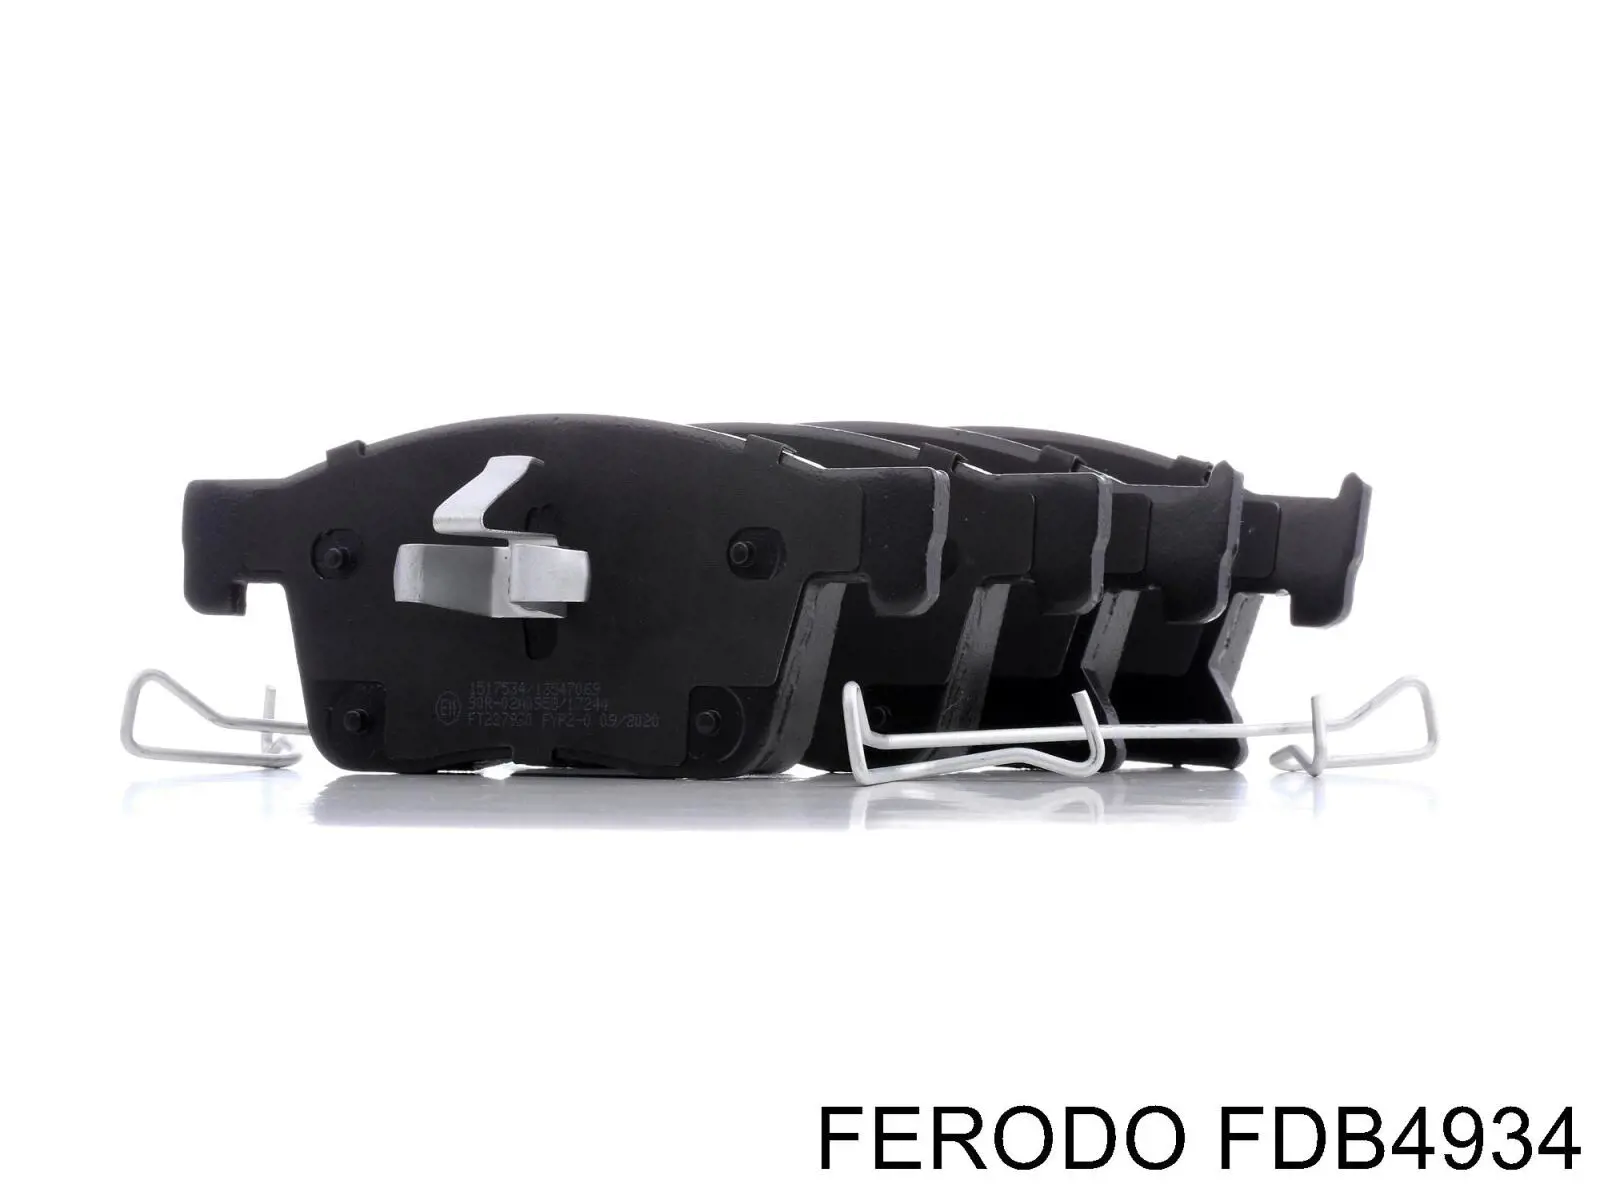 FDB4934 Ferodo pastillas de freno delanteras